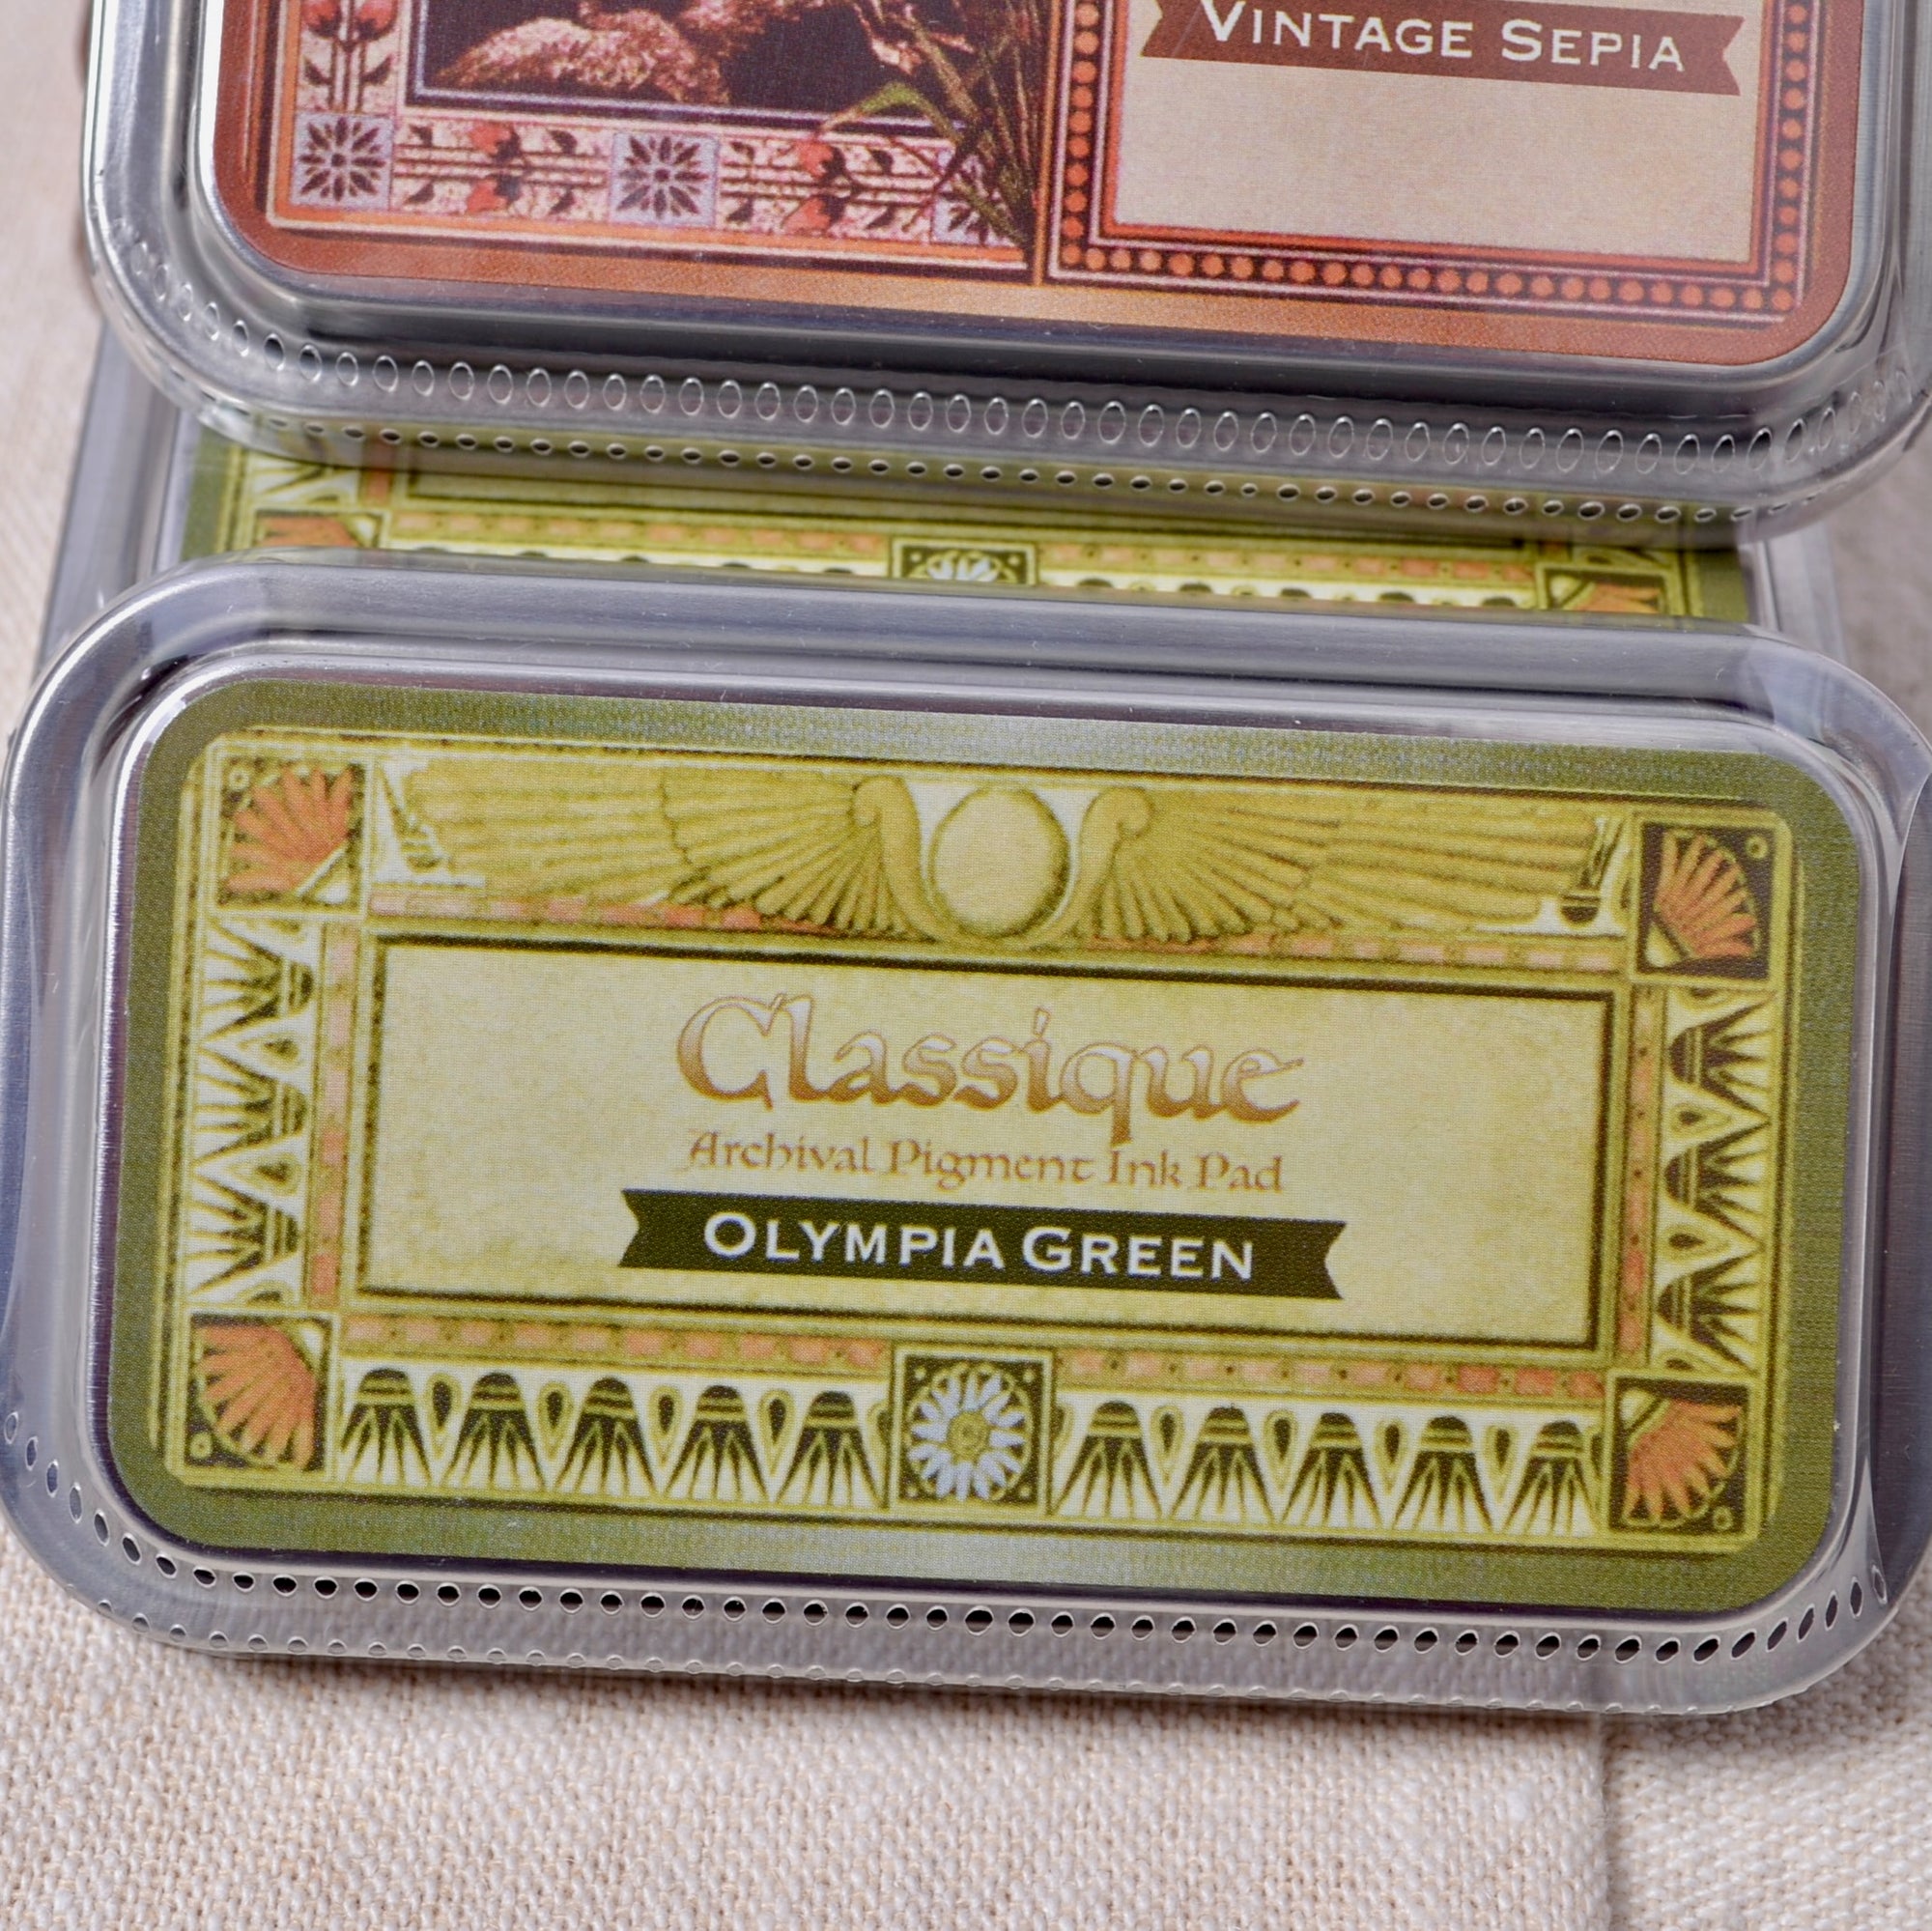 Tsukineko Archival Pigment Ink Pad Olympia Green